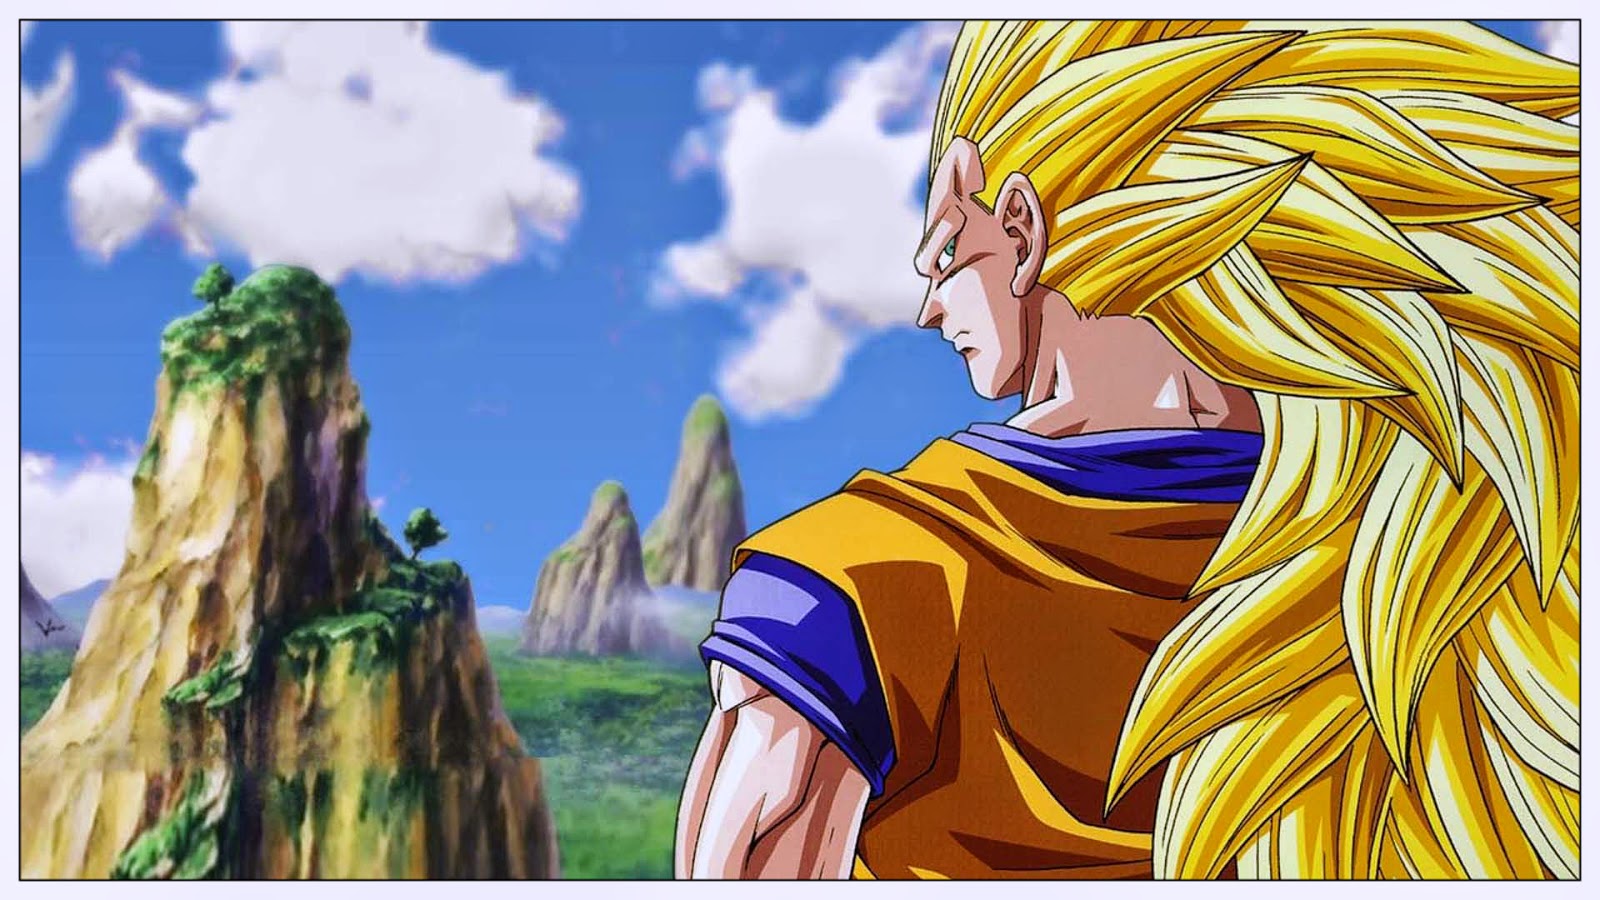 imagenes grandes para fondo de pantalla de goku - imagenes de Dragon Ball para tu fondo de pantalla Taringa!